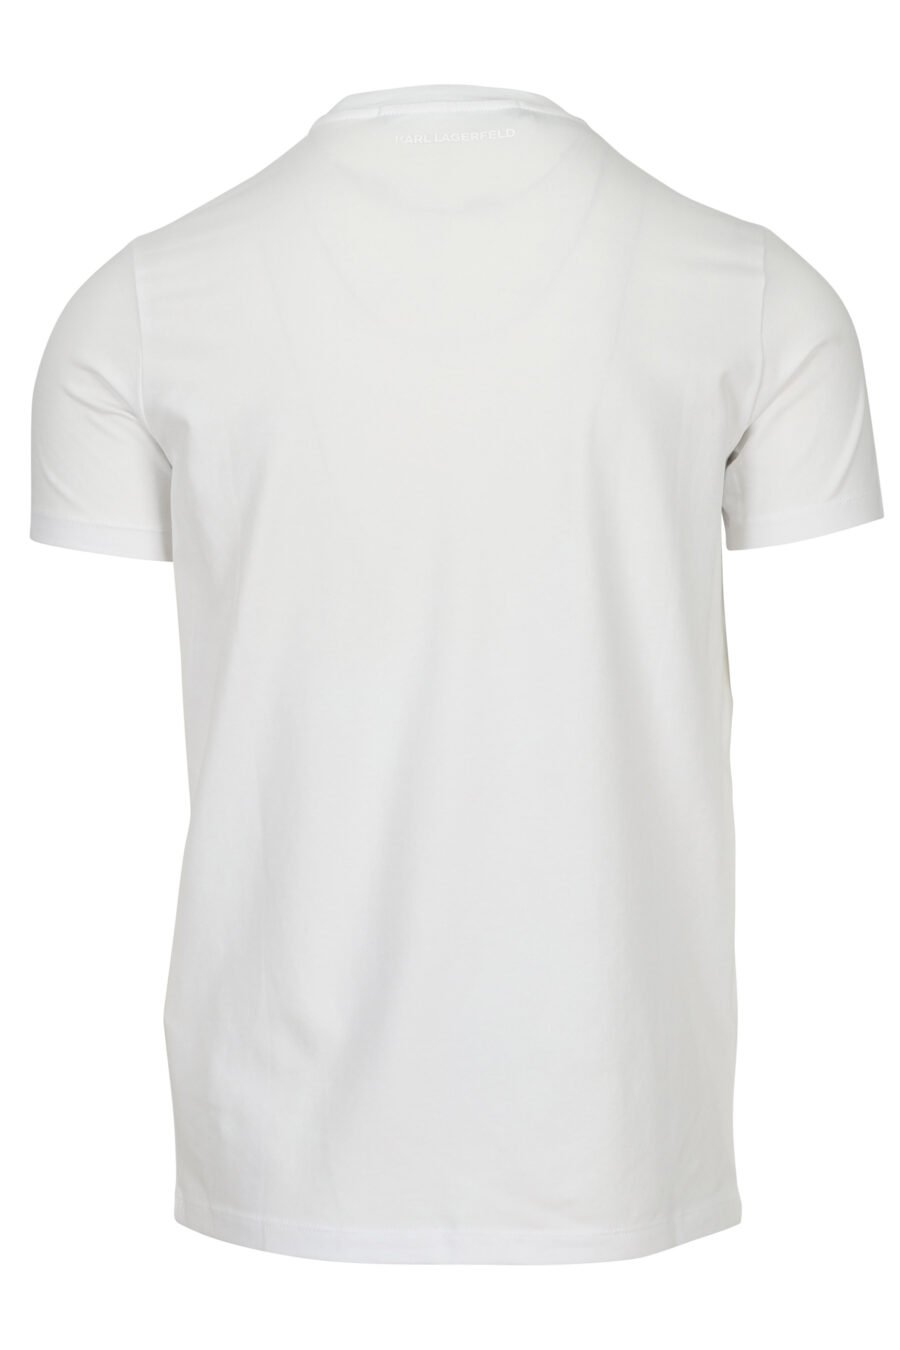 Camiseta blanca con minilogo blanco K - 4062225534179 1